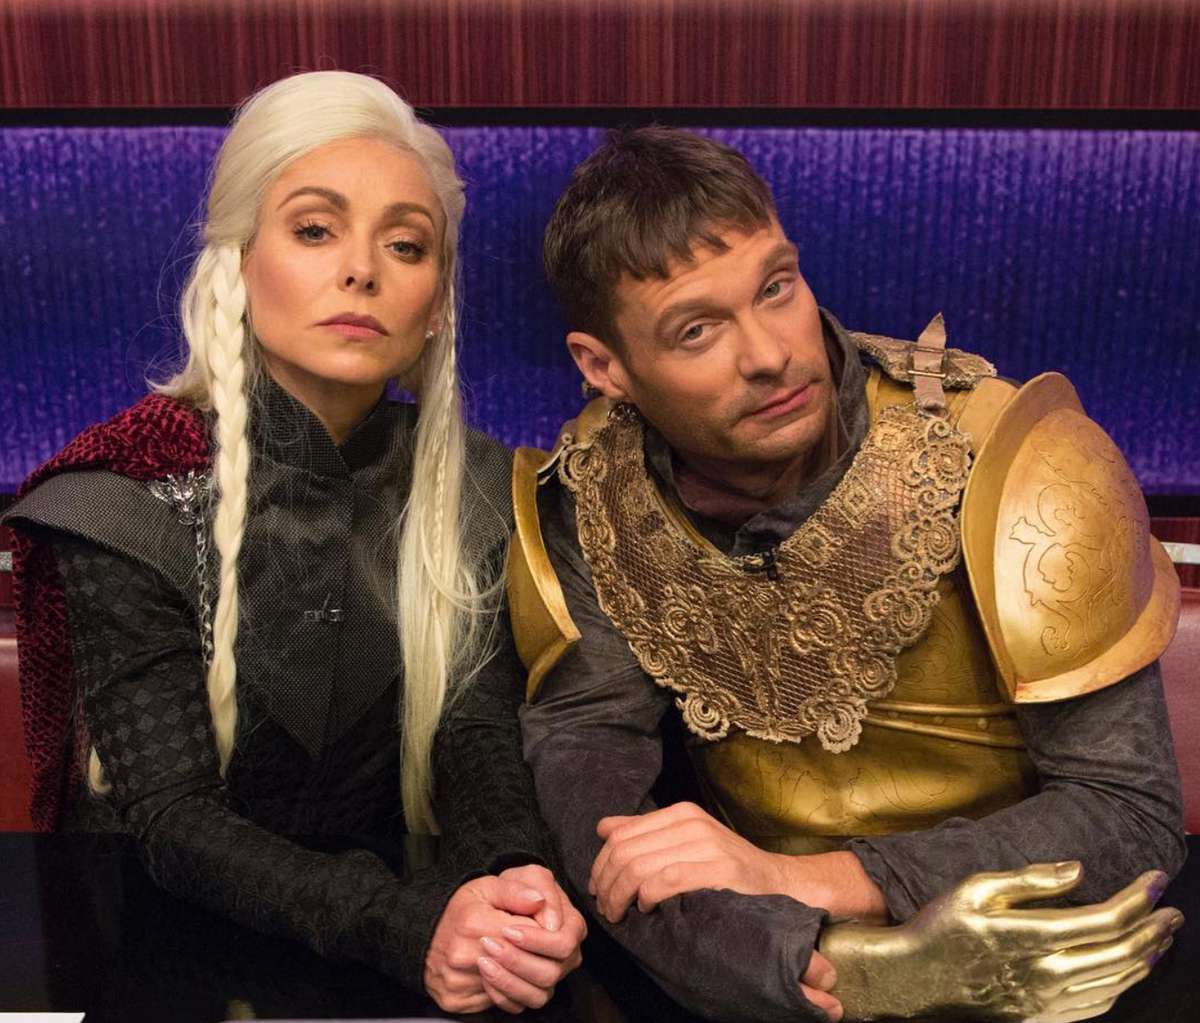 Kelly Ripa and Ryan Seacrest as Daenerys Targaryen and Jaime Lannister